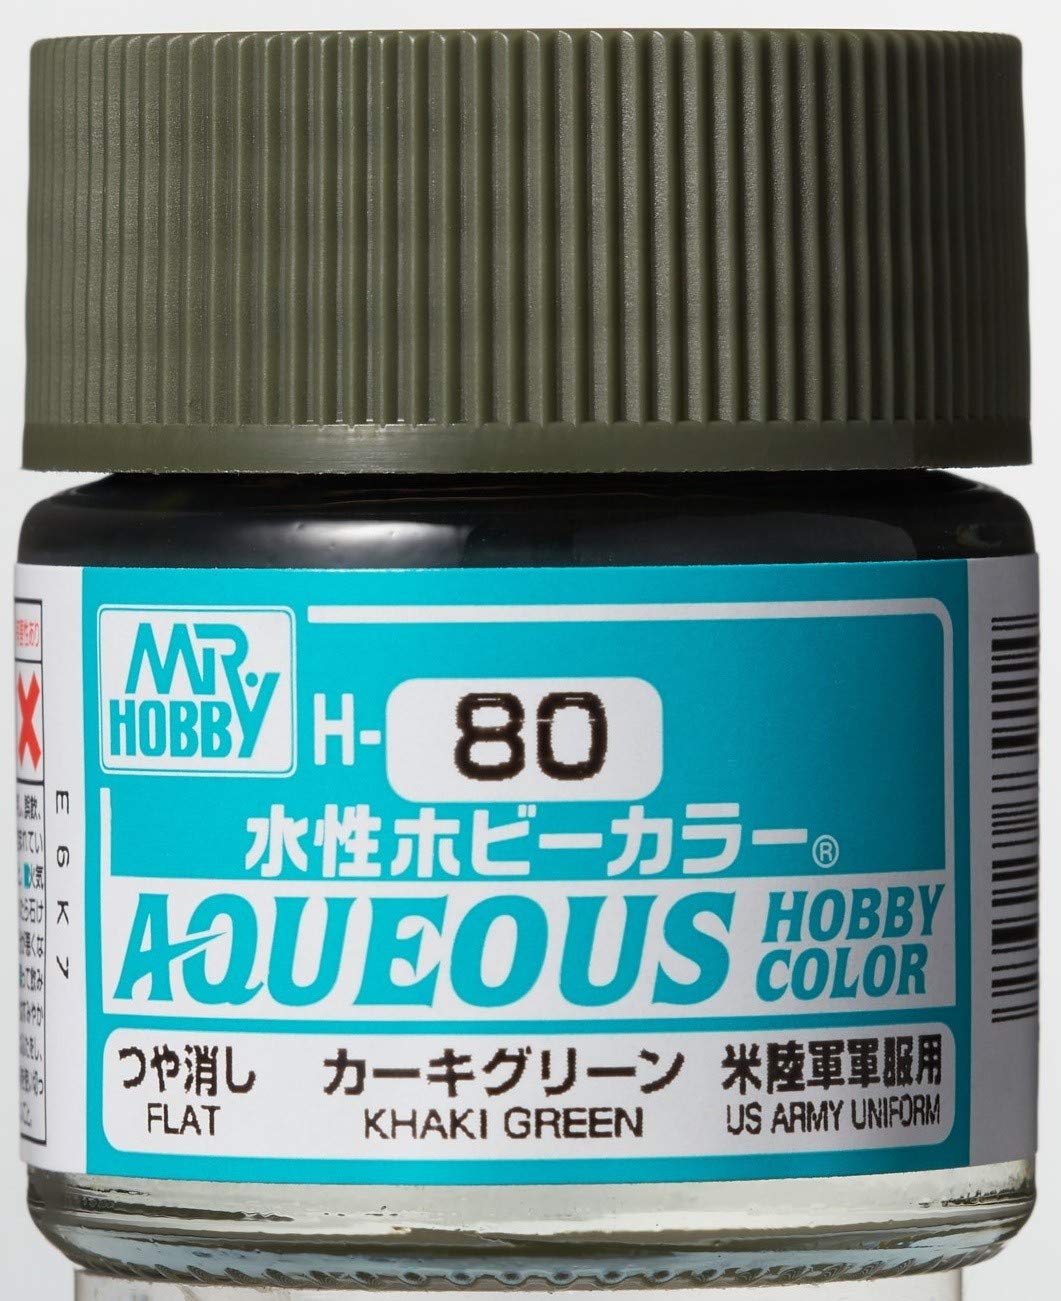 Mr. Hobby Aqueous Hobby Color H80 Flat Khaki Green 10ml Bottle